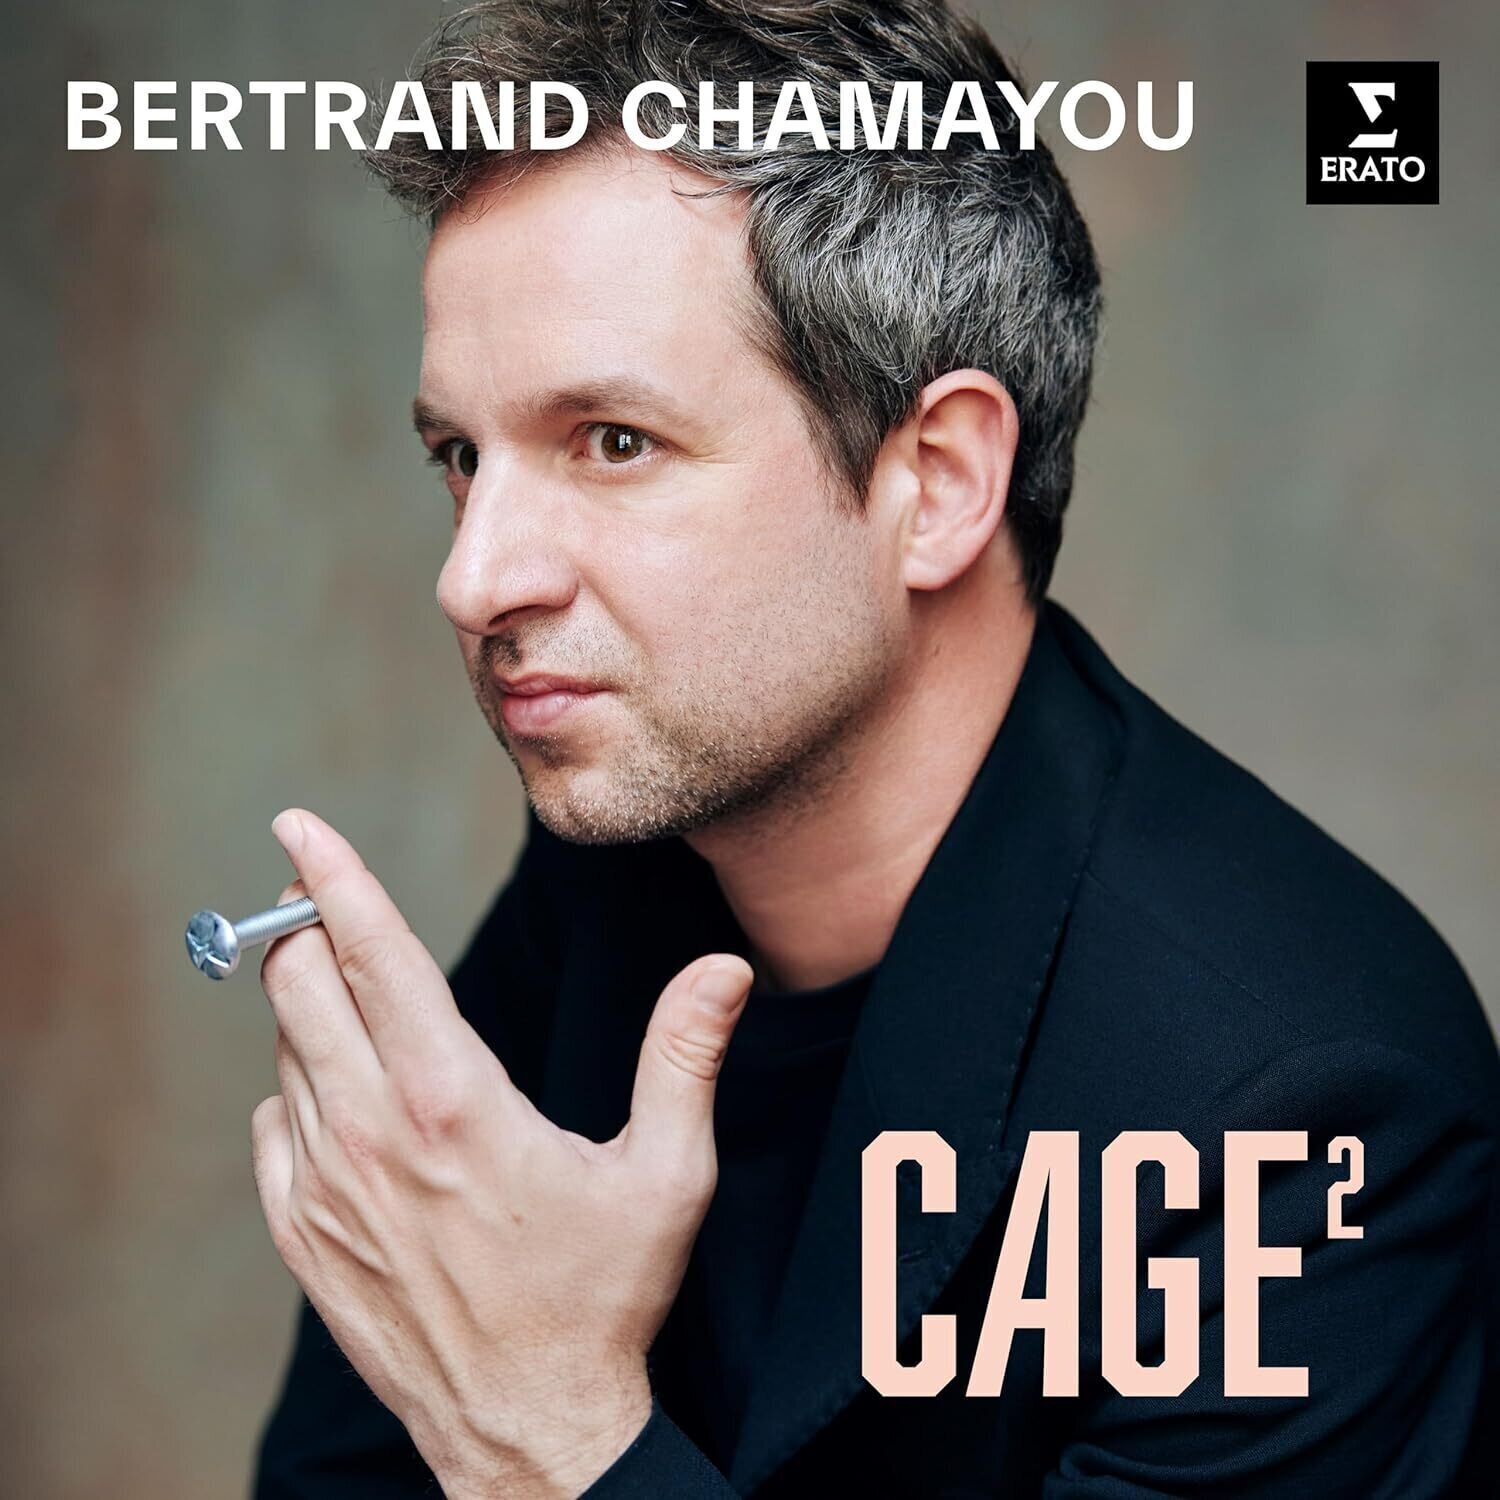 CD de música Bertrand Chamayou - Cage2 (CD)